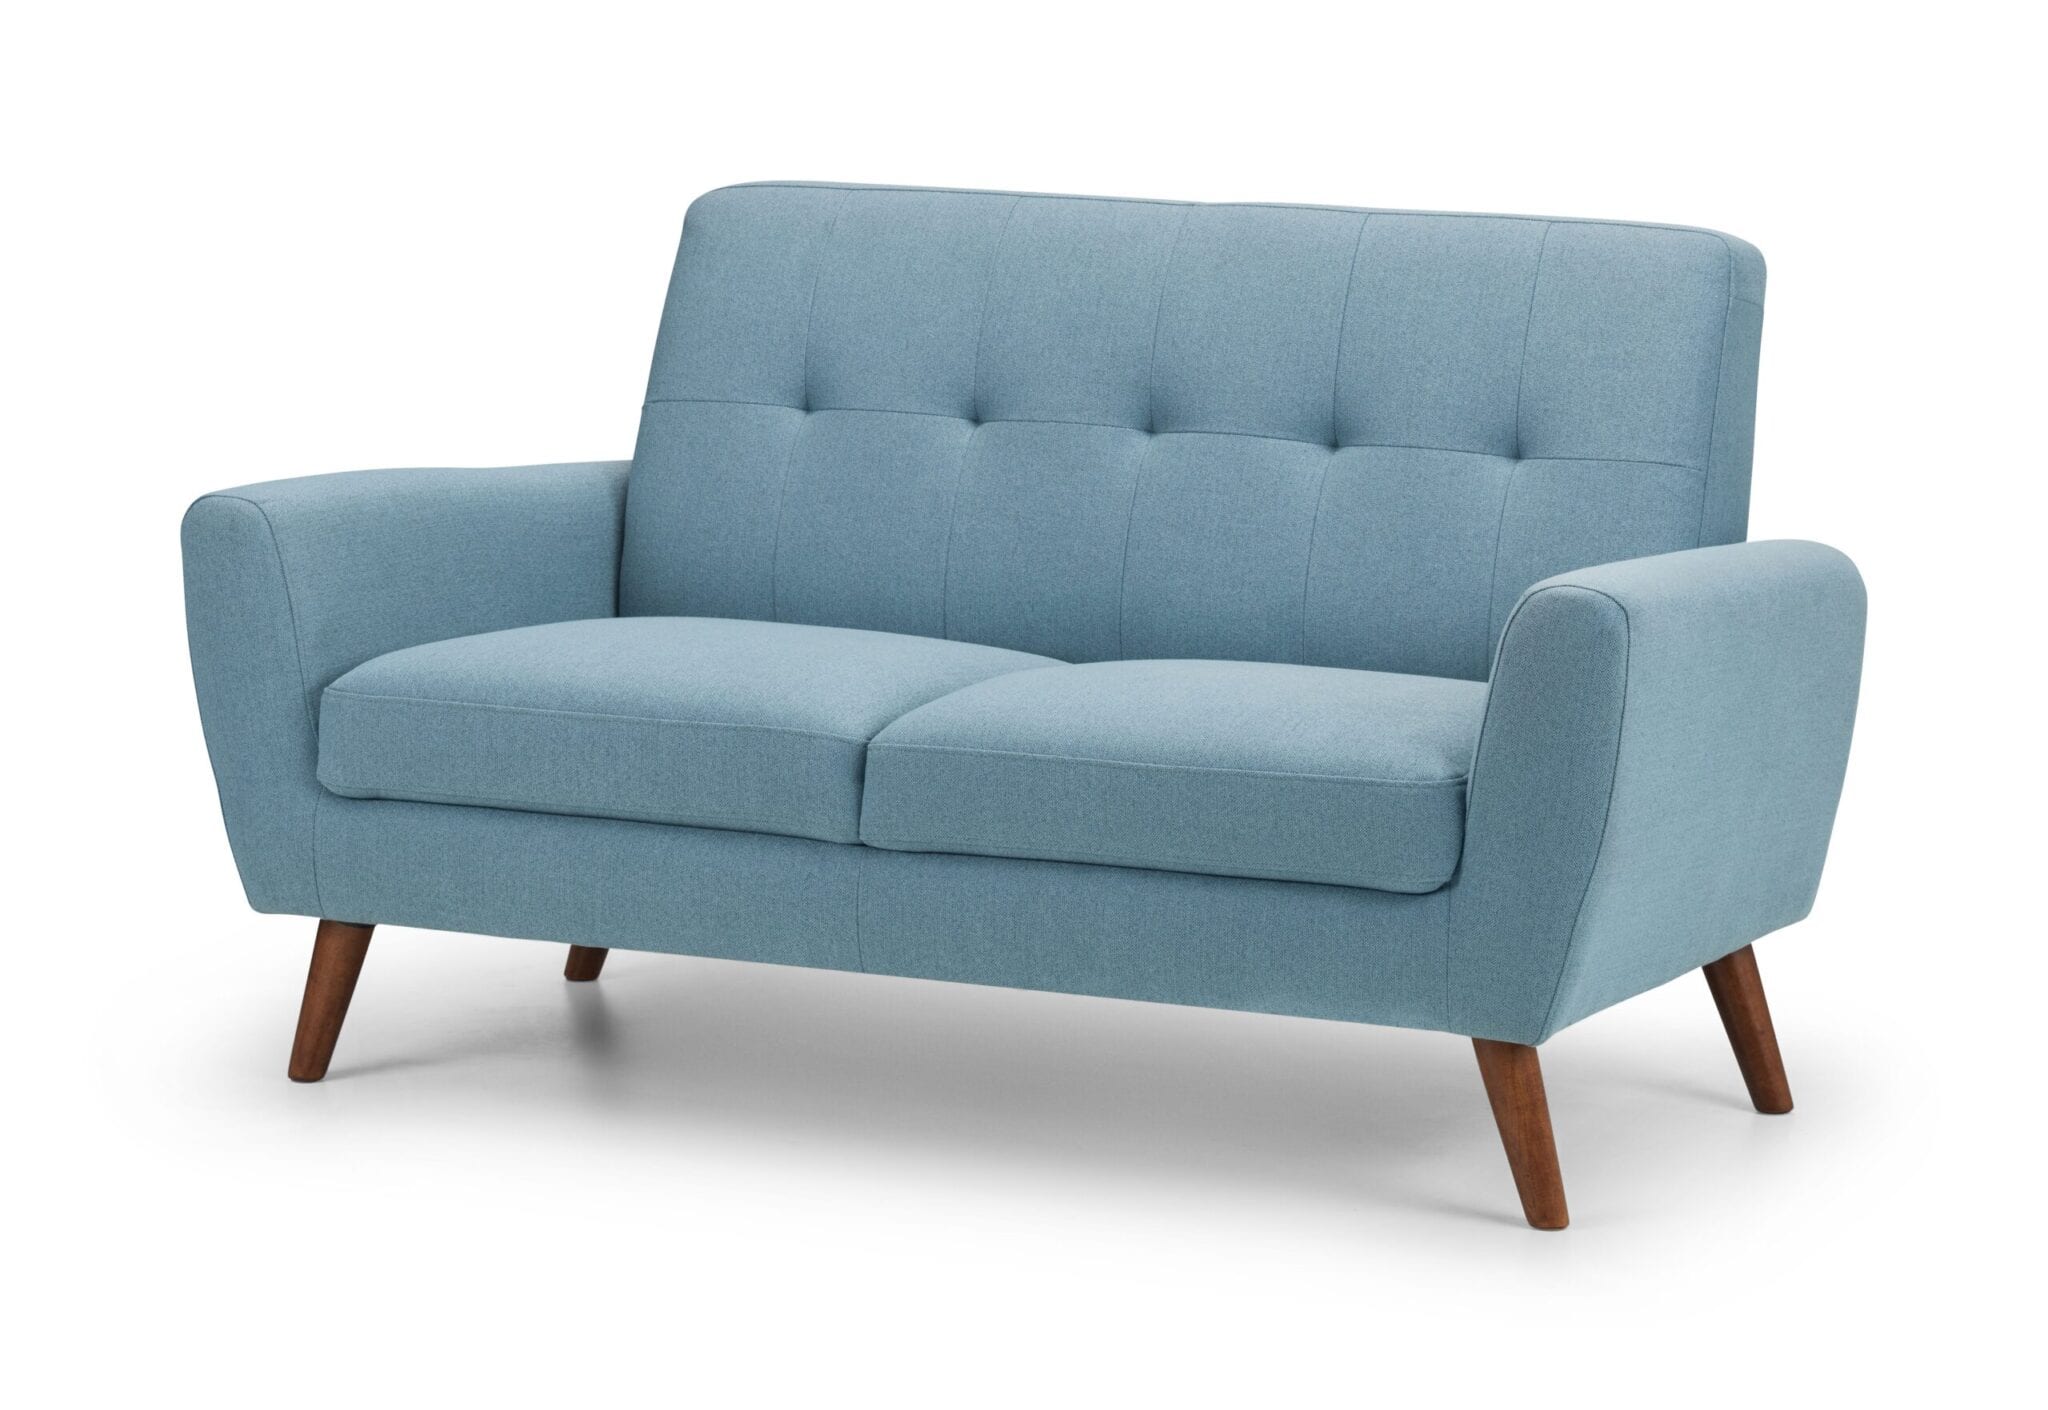 Honcho 2 Seater Compact Sofa - Blue